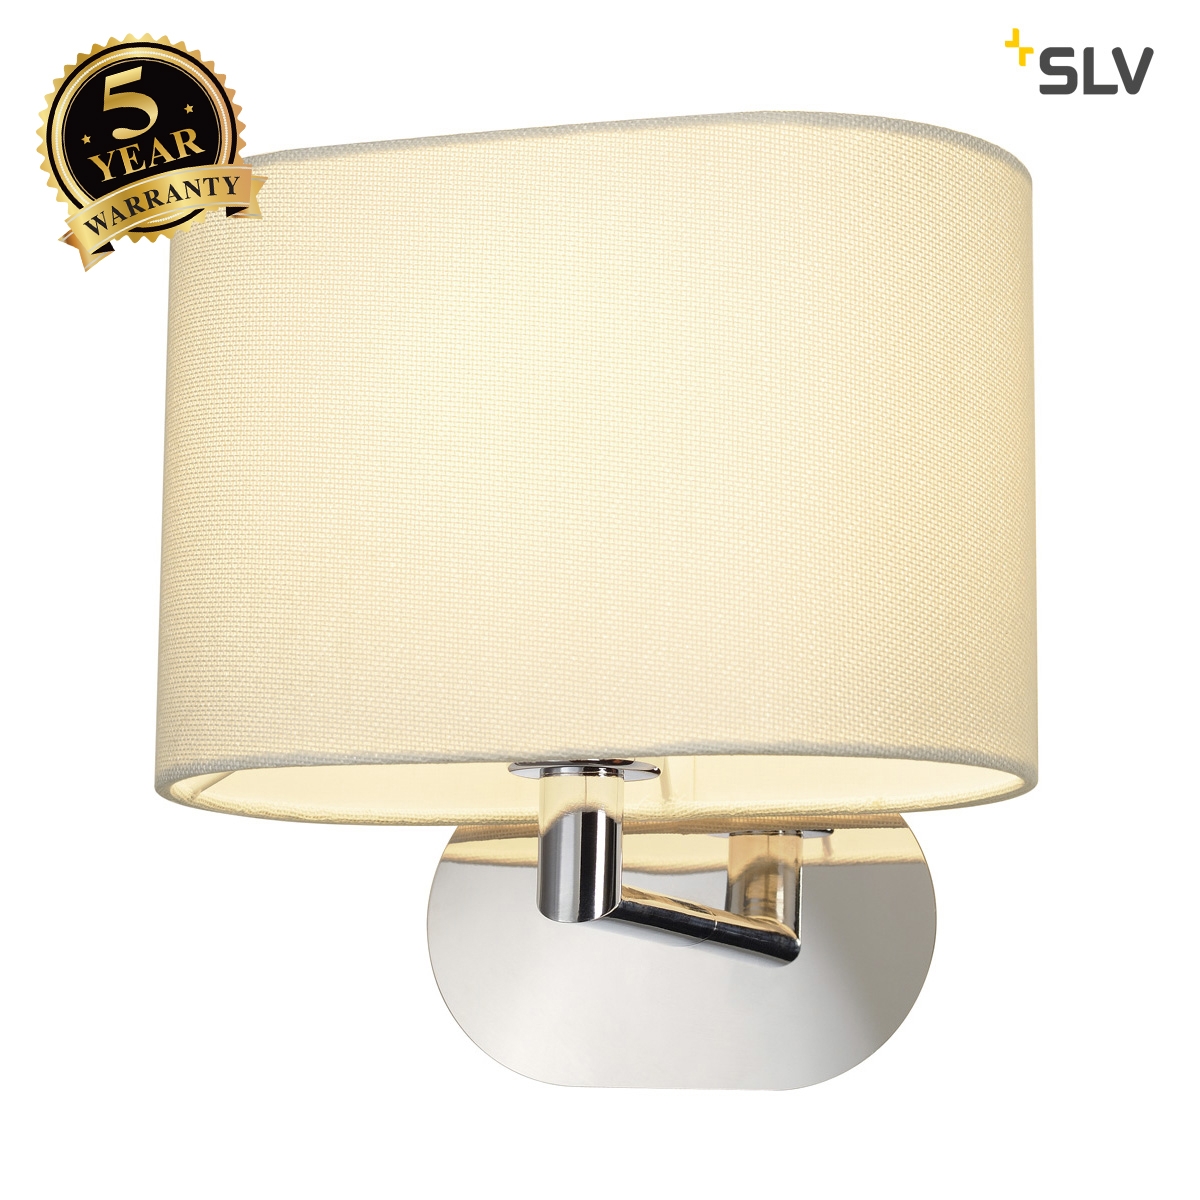 SLV SOPRANA OVAL wall light, WL-1, white textile, E27, max. 60W 155861